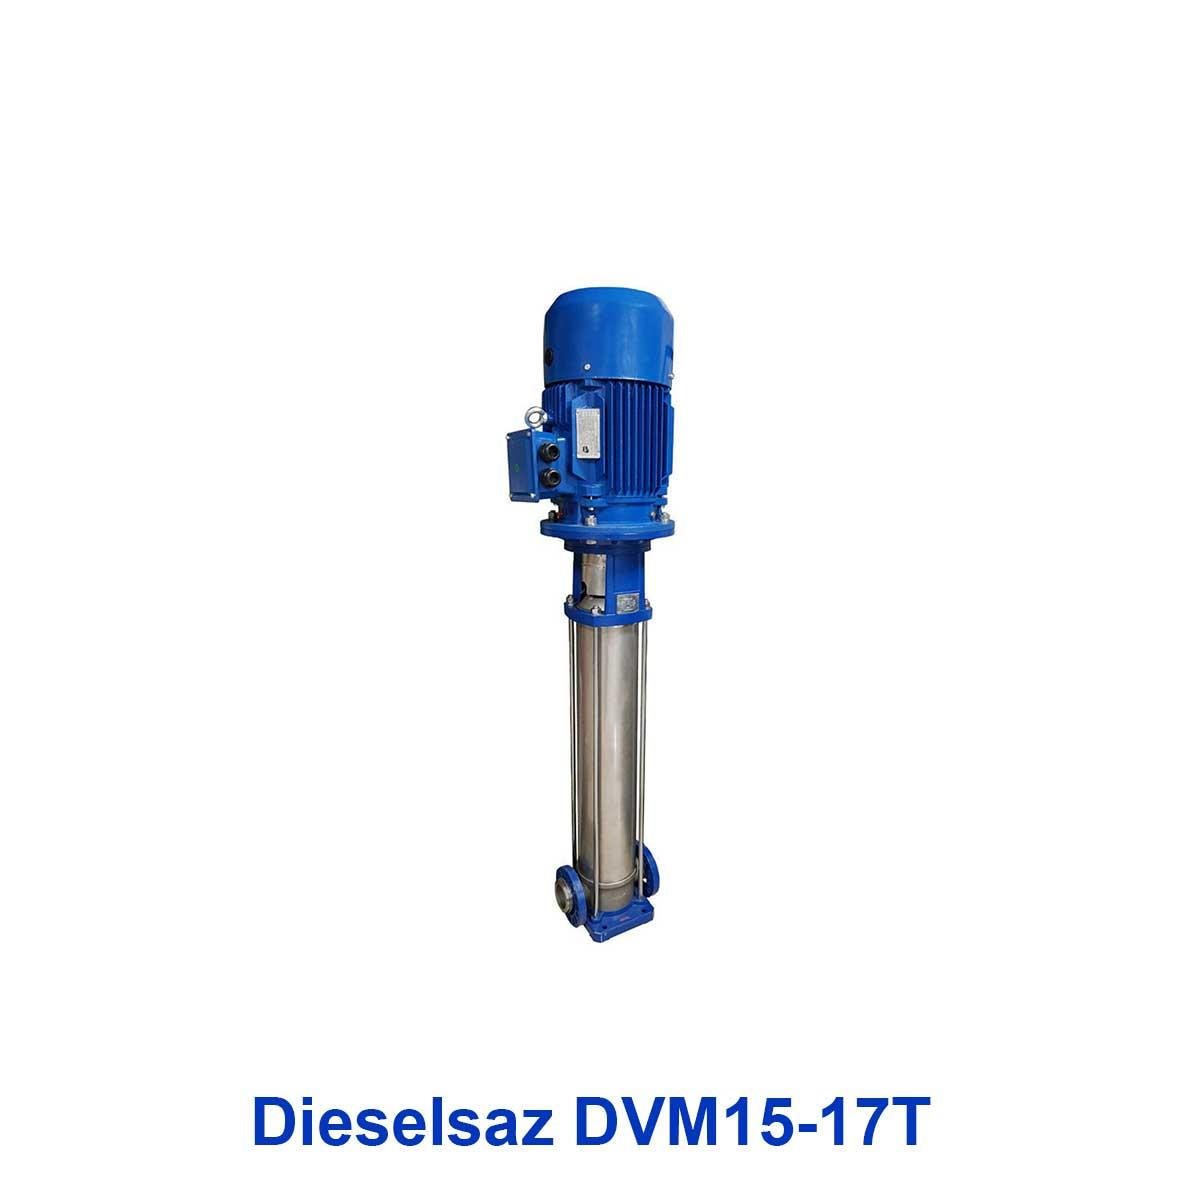 waterpump-vertical-Dieselsaz-DVM15-17T